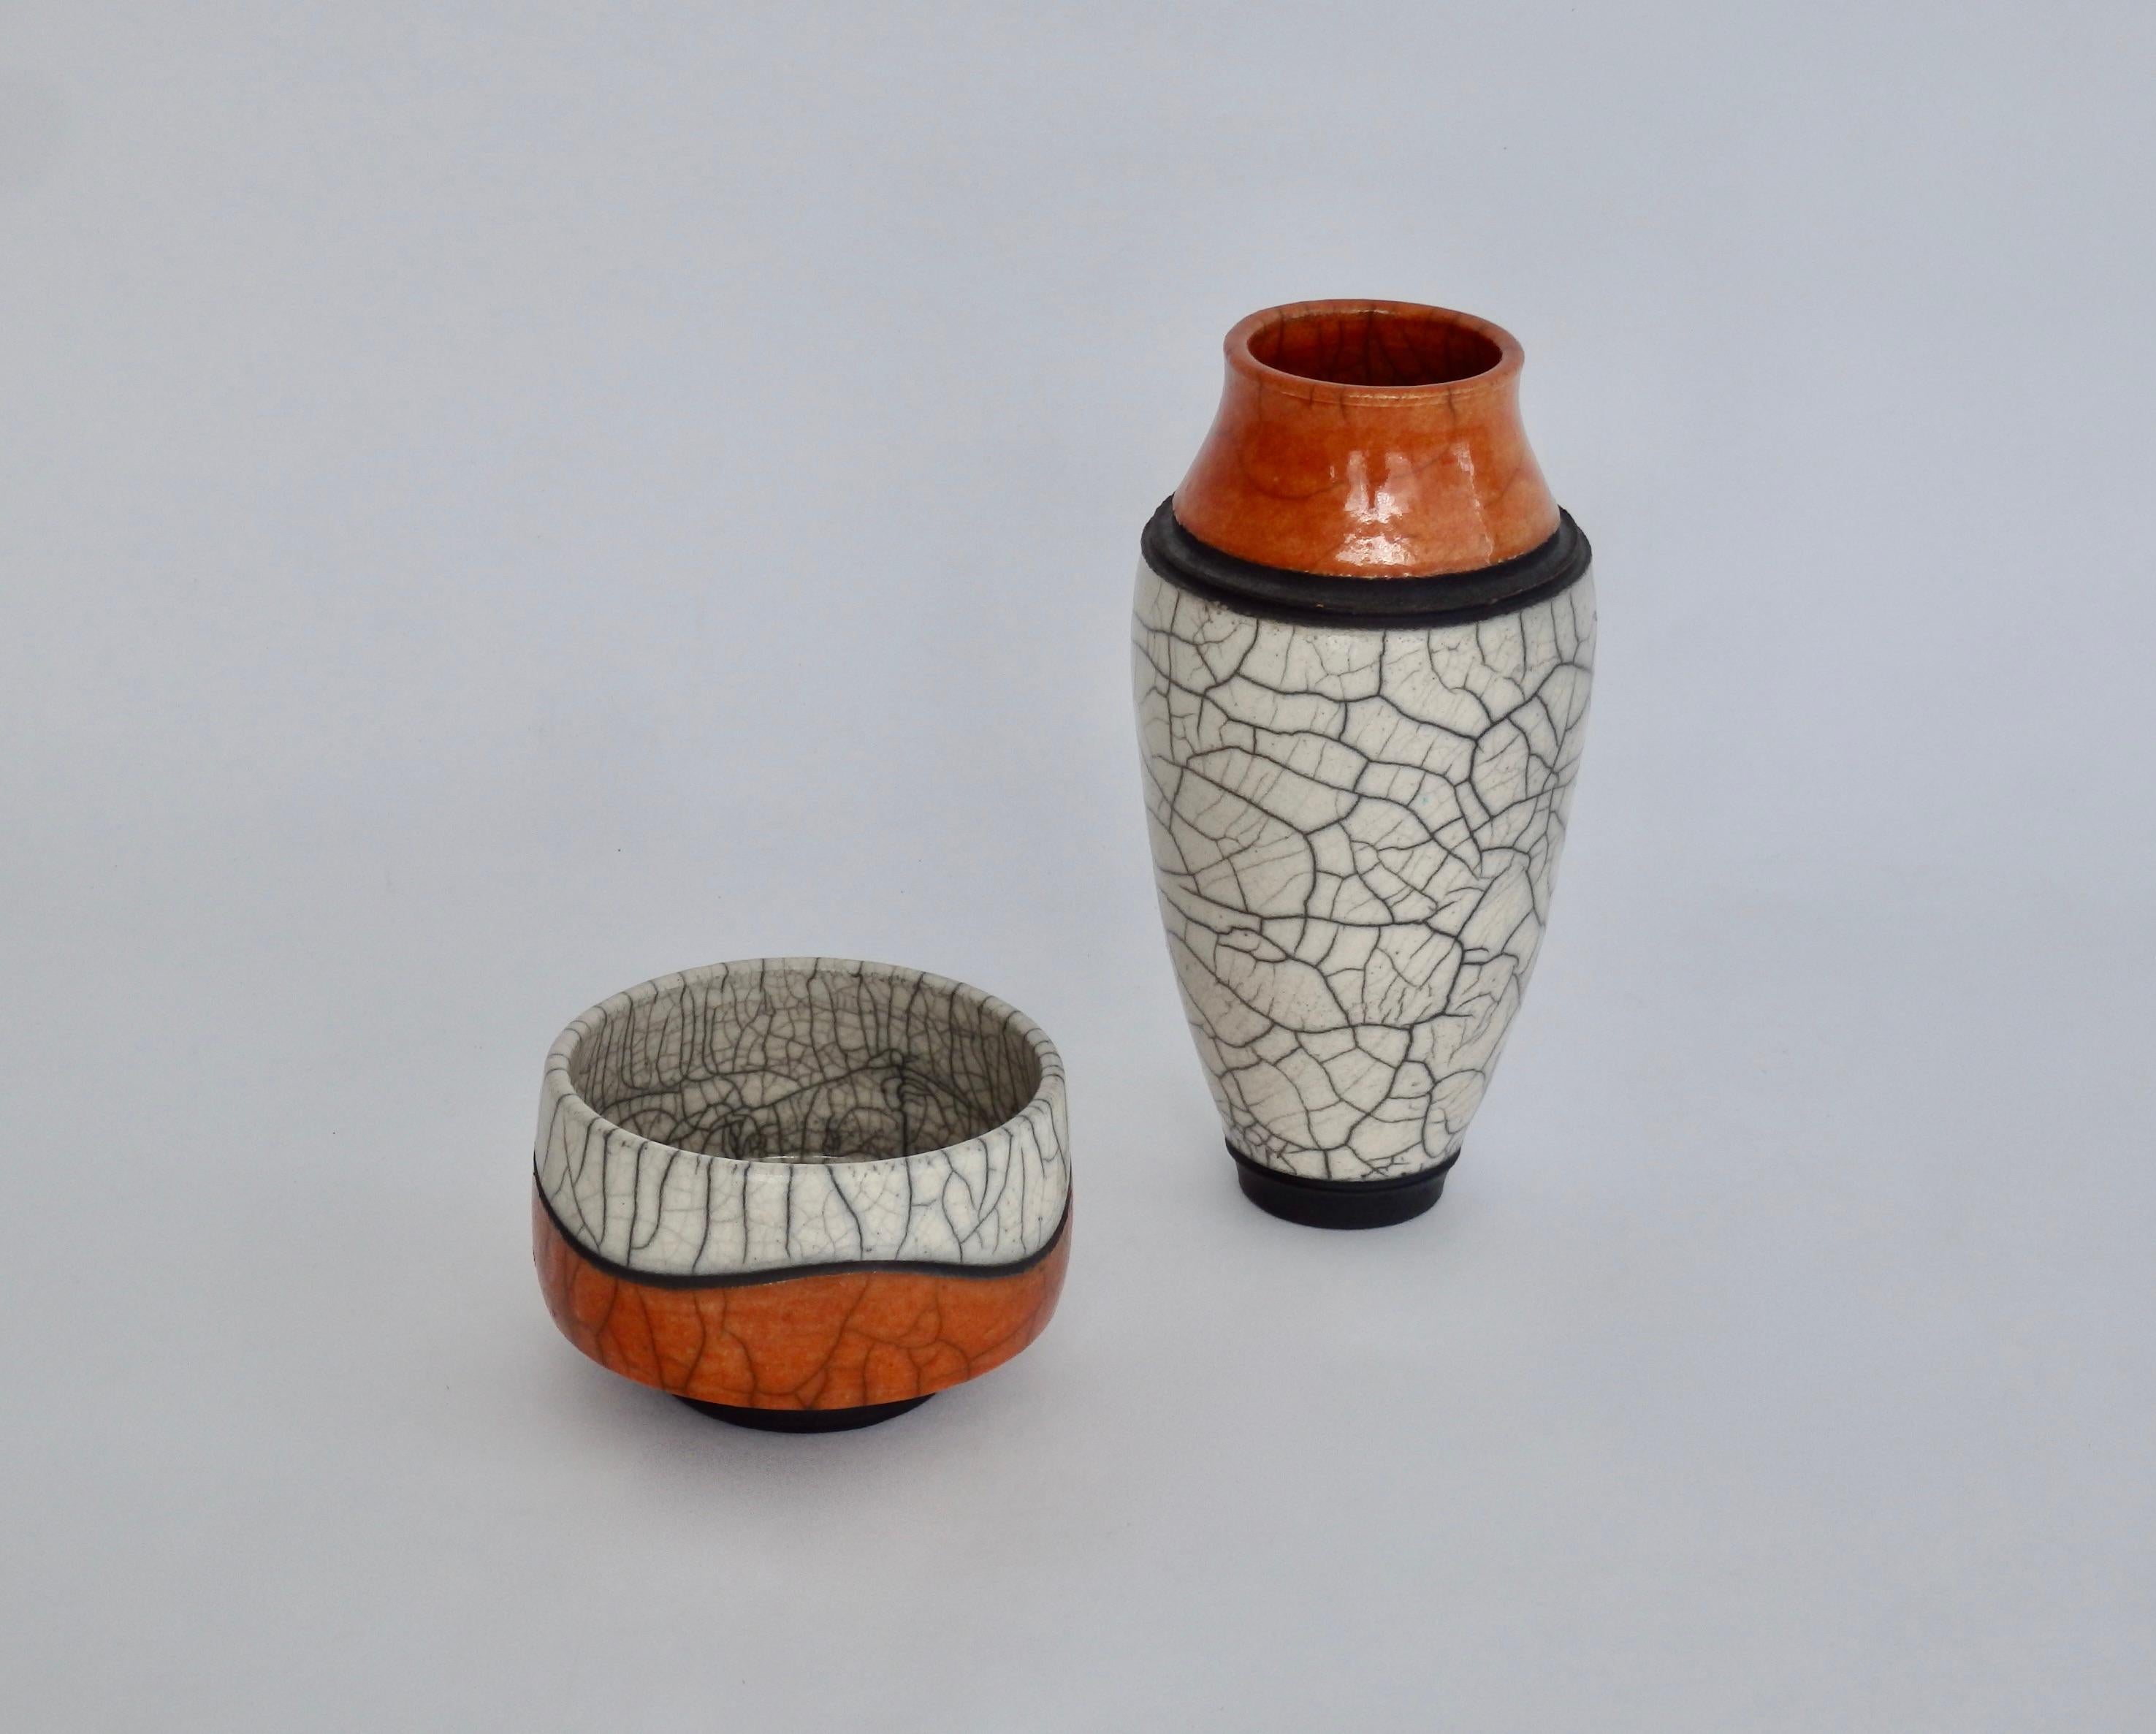 Pair of crackle glaze raku stoneware vessels handmade by Jeff Hale, signed. 
Measures: Vase '06, measures 7.25